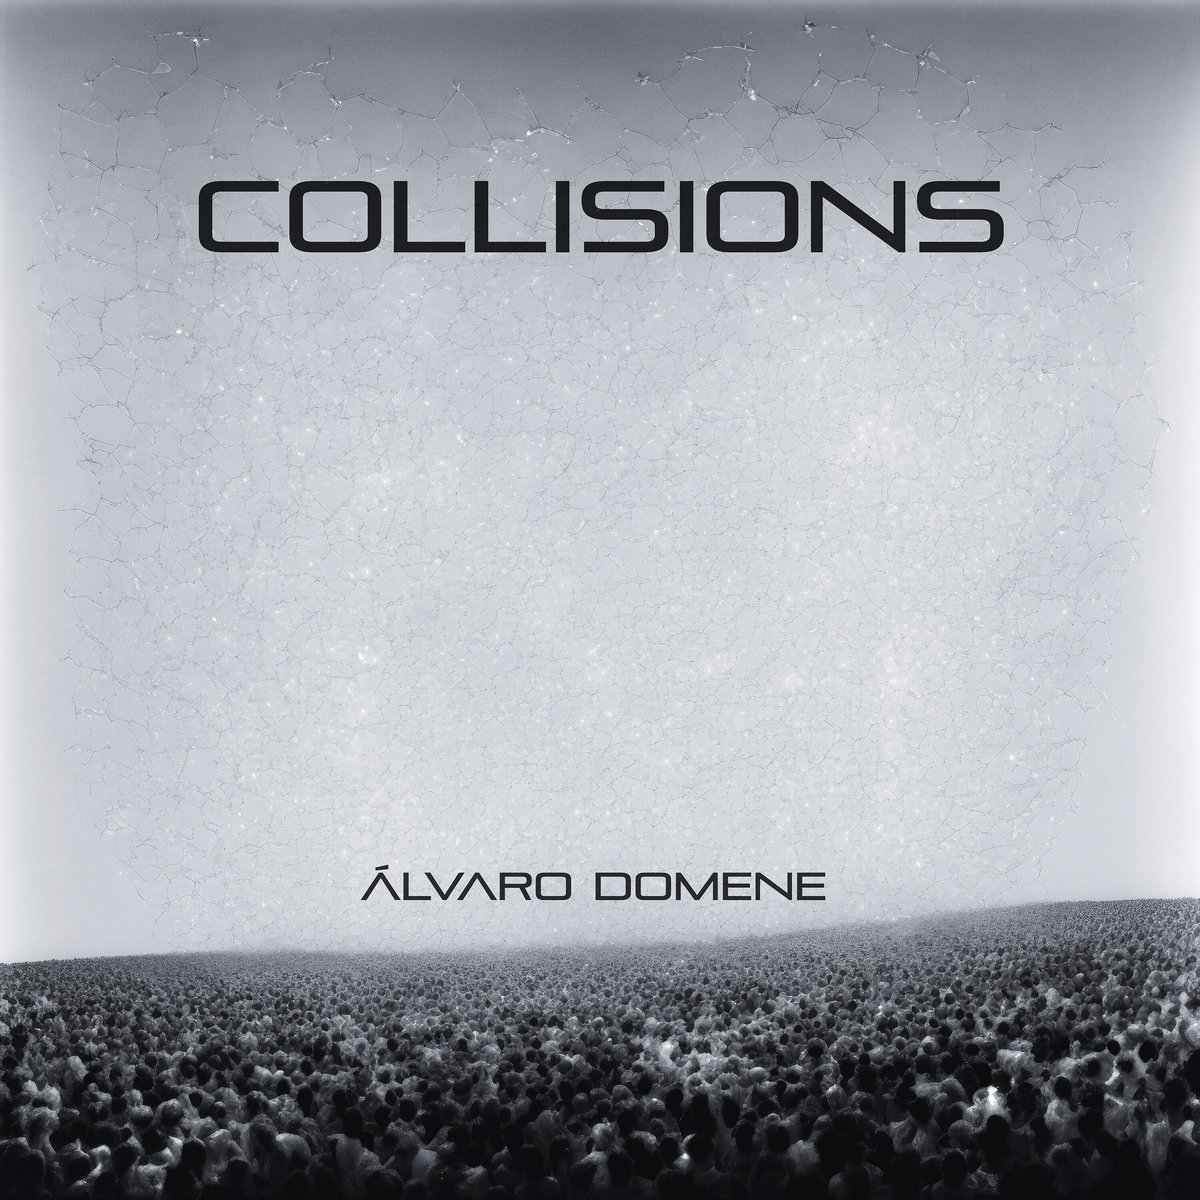 COLLISIONS by Álvaro Domene